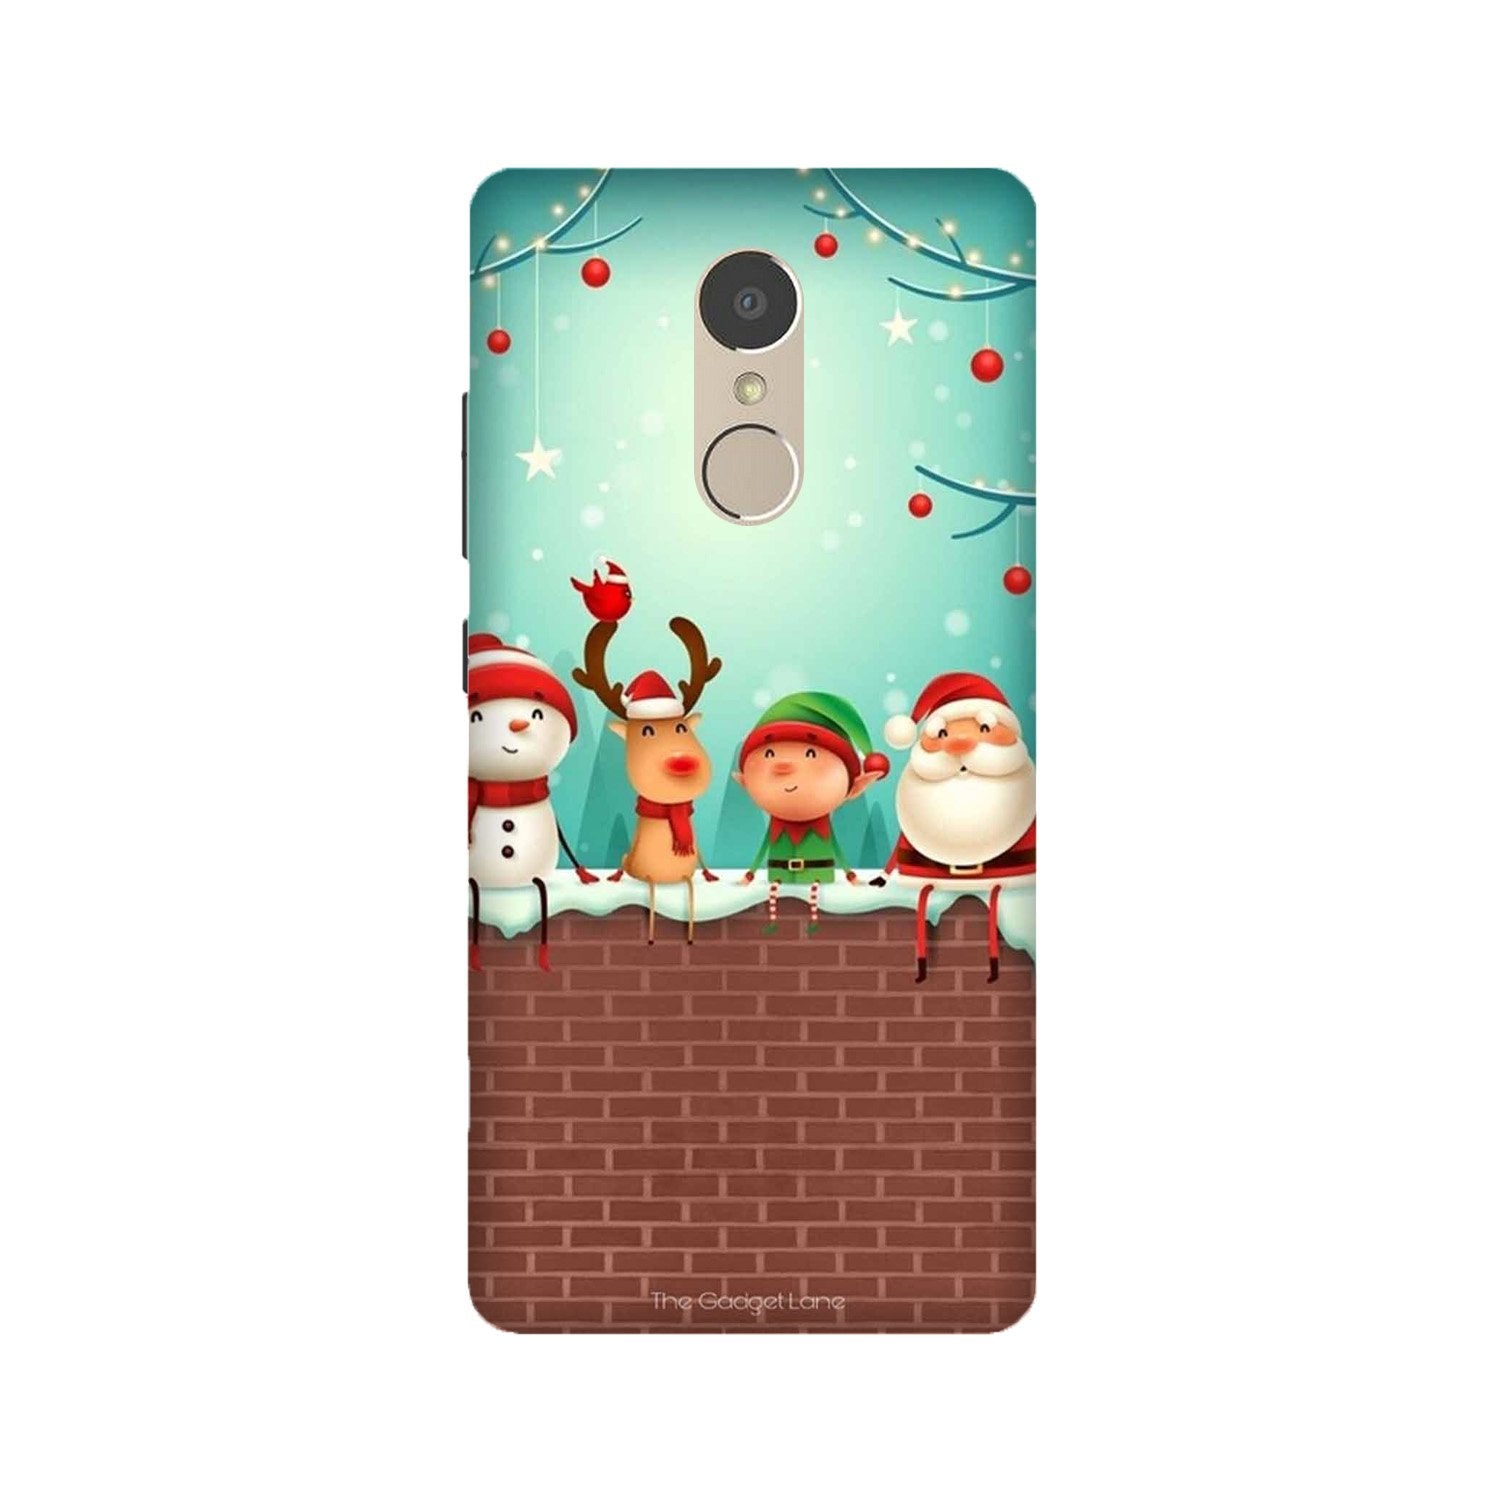 Santa Claus Mobile Back Case for Lenovo K6 Note (Design - 334)